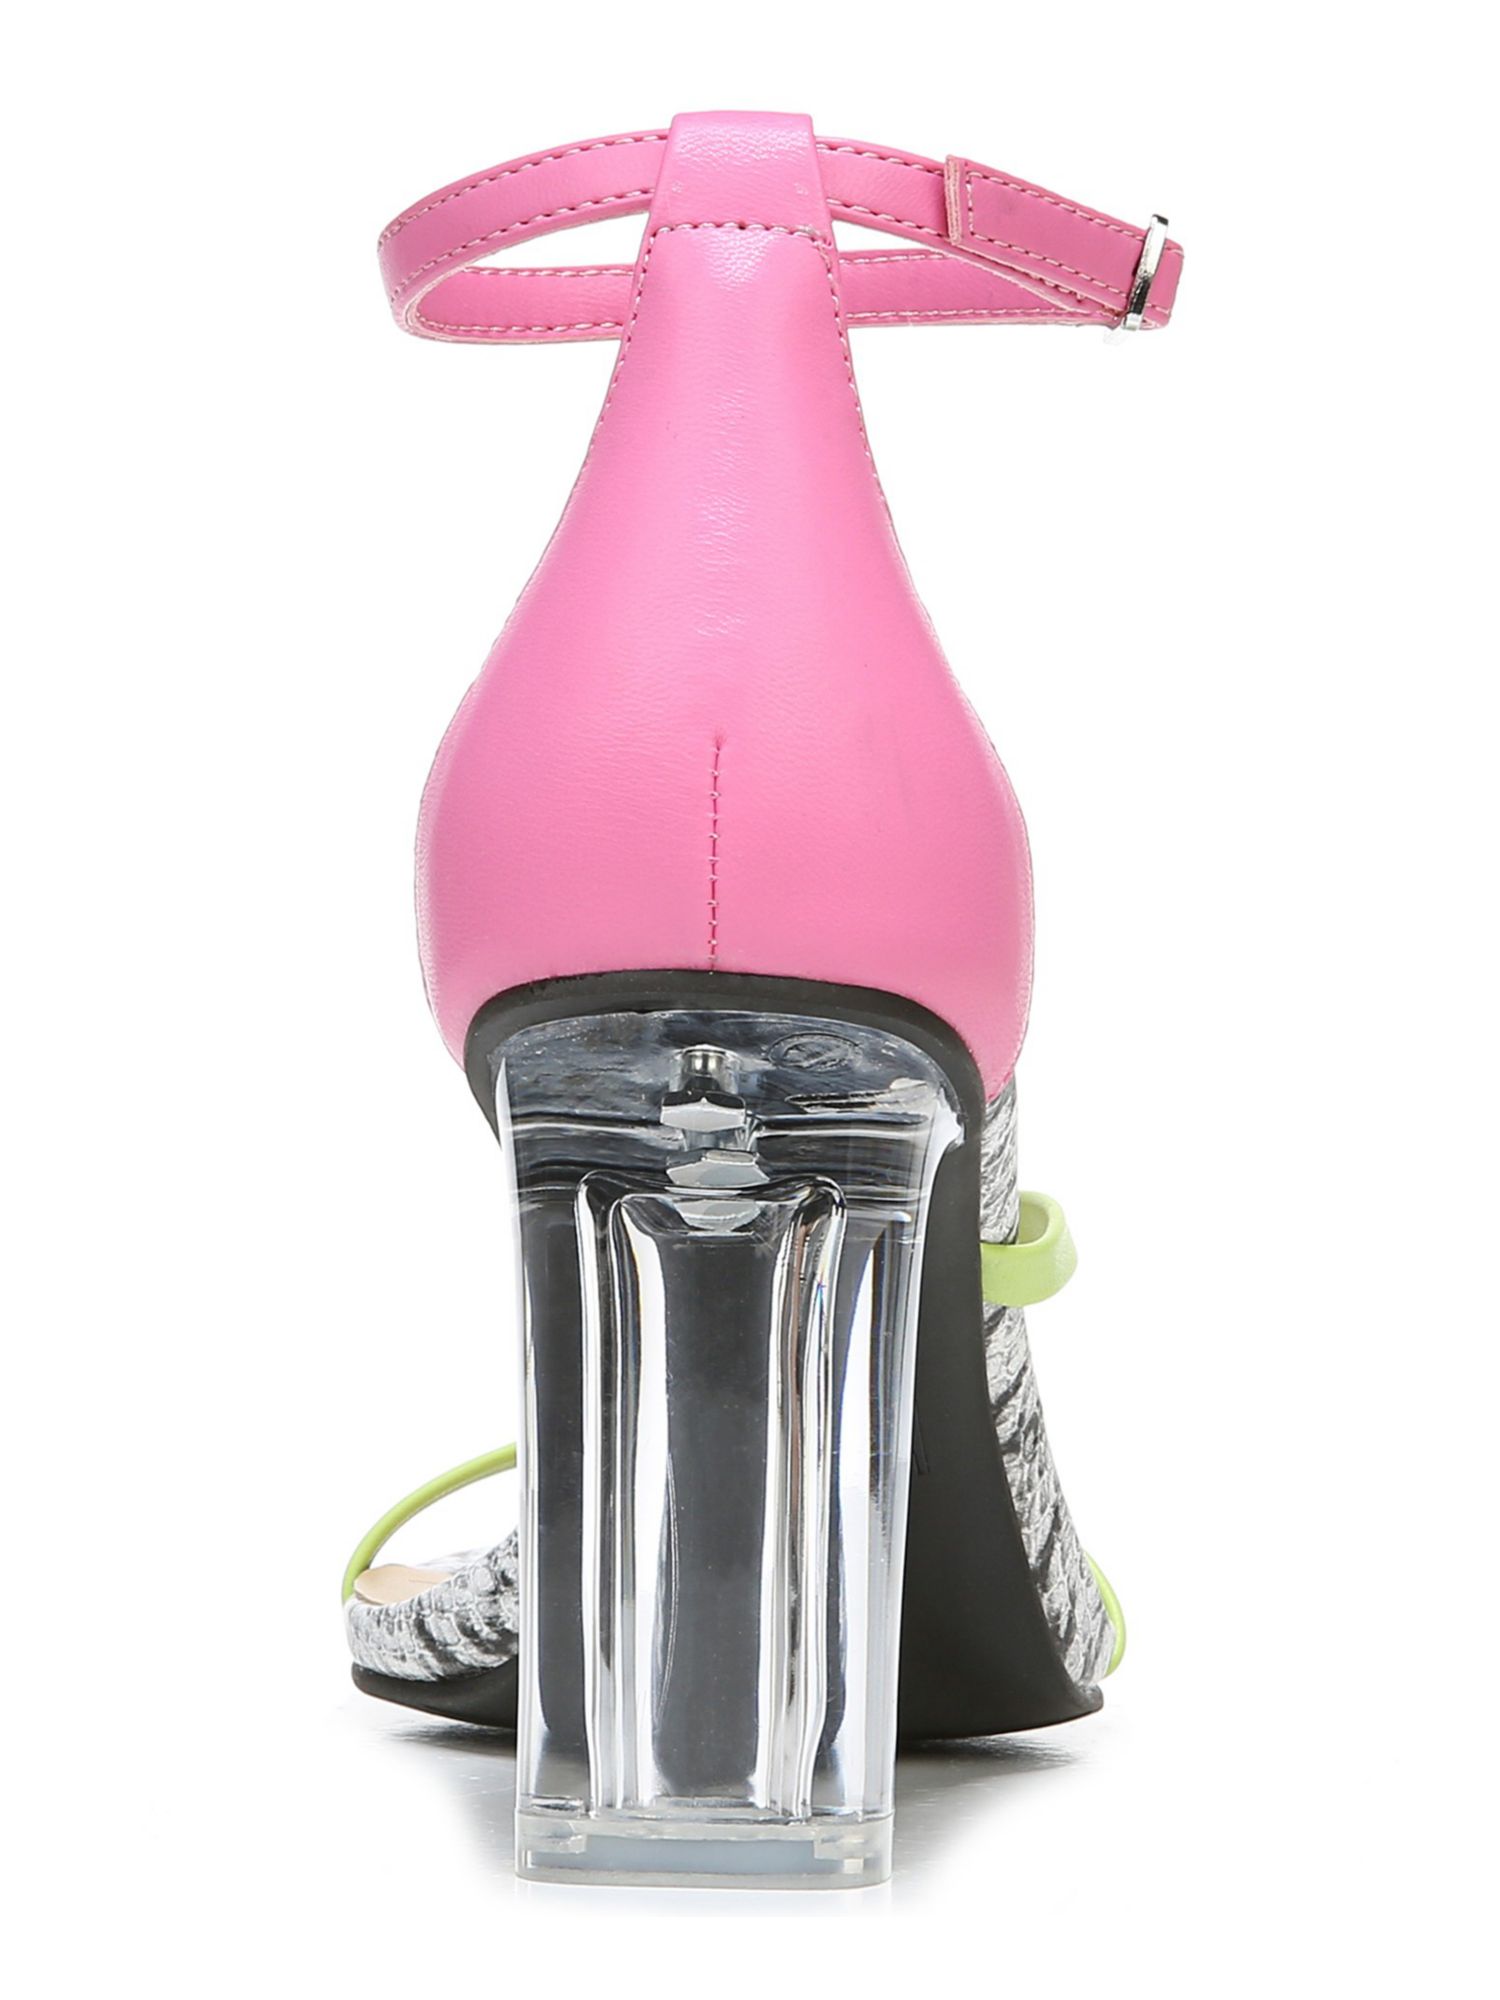 BAR III Womens Pink Transparent Heel Blakke Block Heel Thong Sandals Shoes 6 M